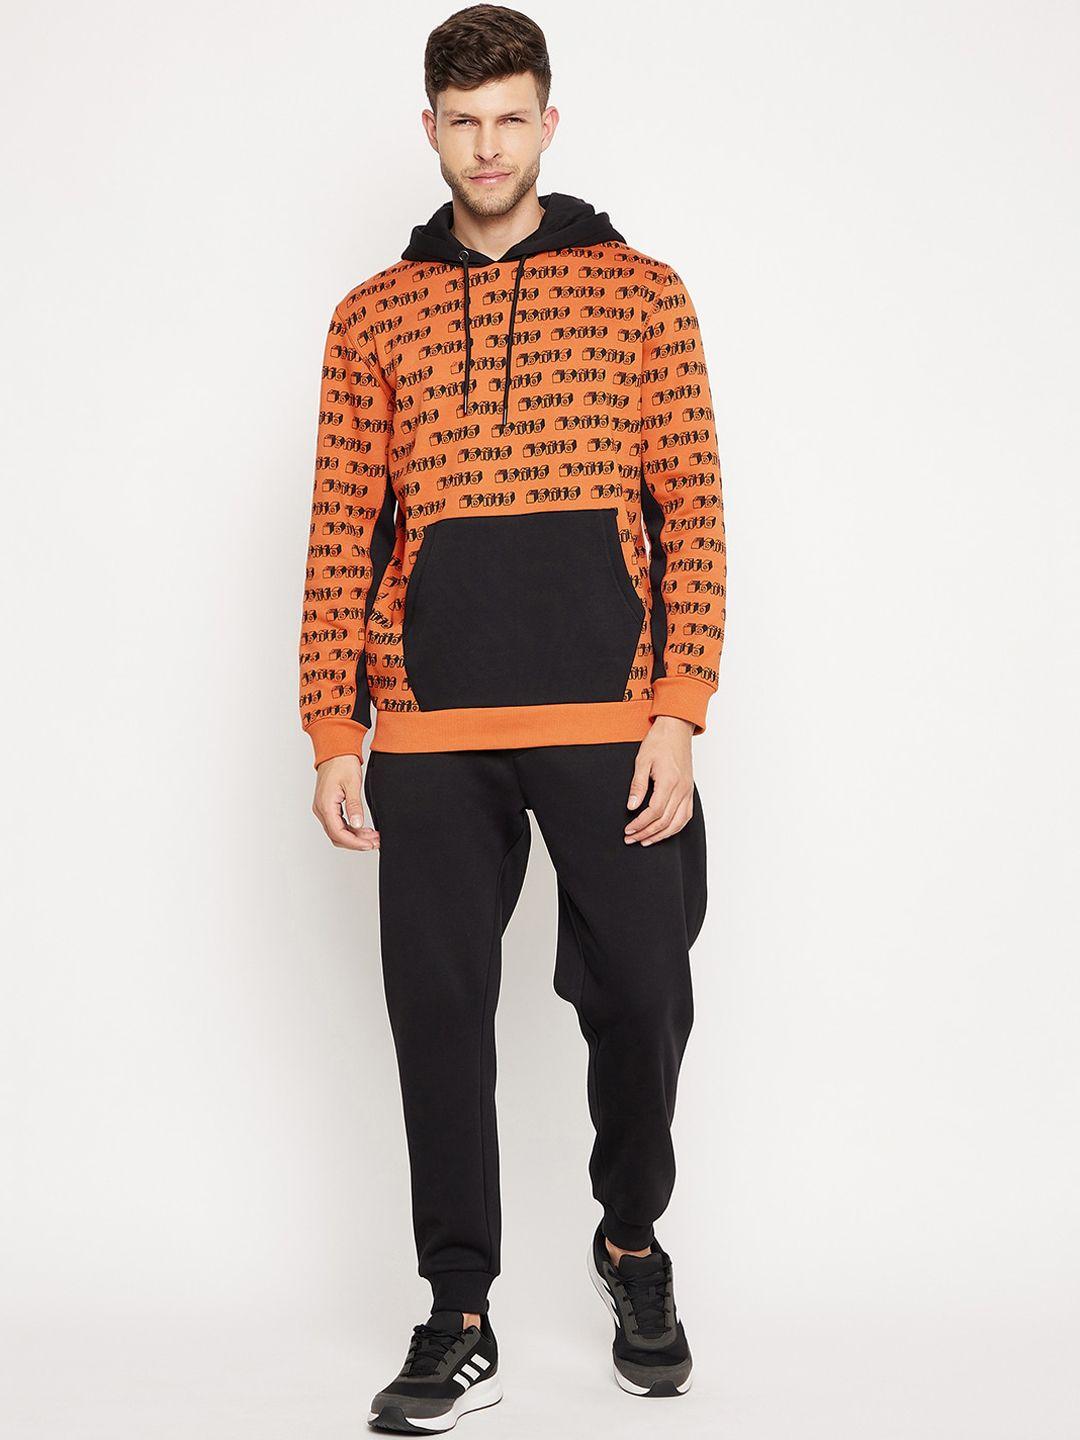 edrio men black & orange color printed fleece tracksuits with hooded